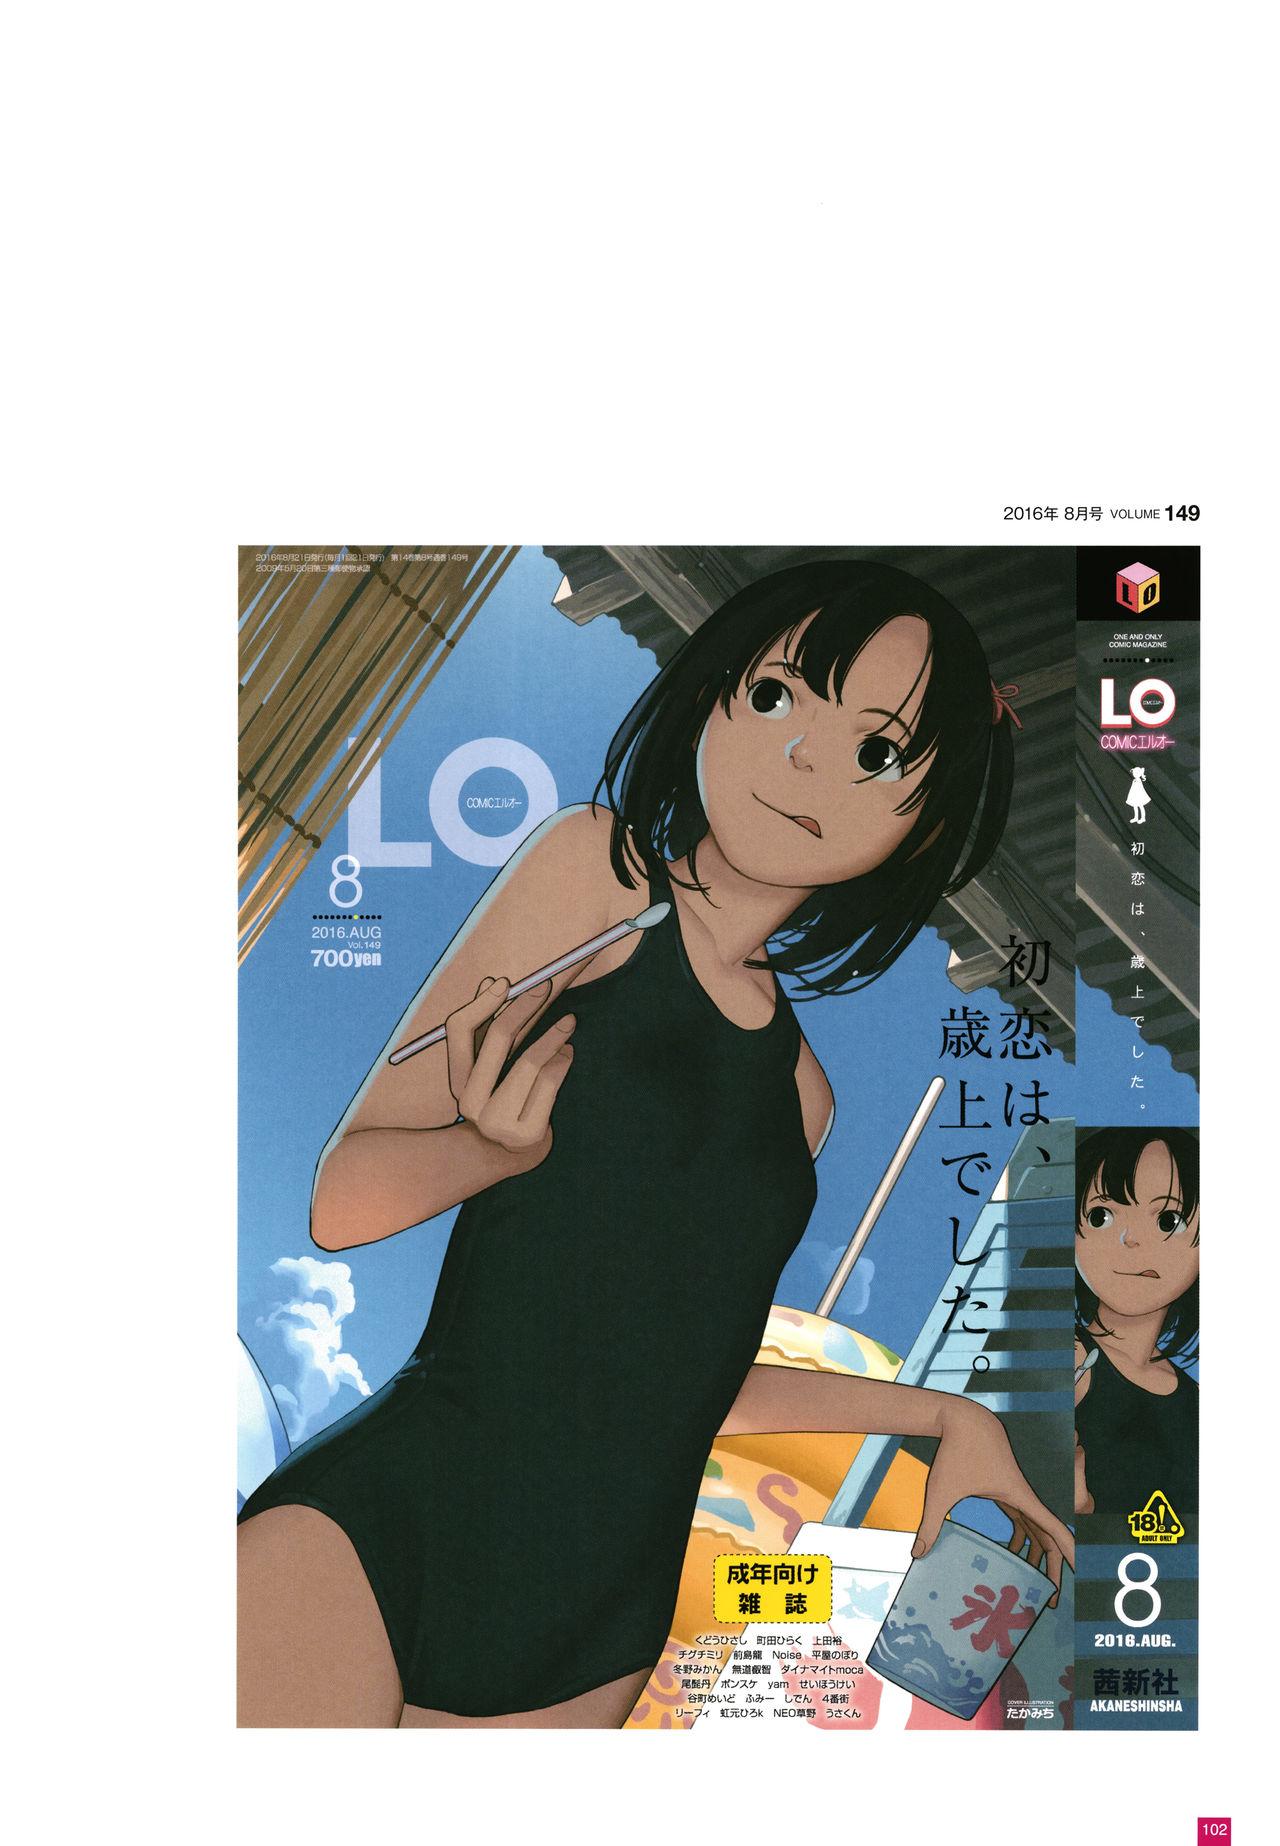 [Takamichi] LO Artbook 2-B TAKAMICHI LO-fi WORKS 104